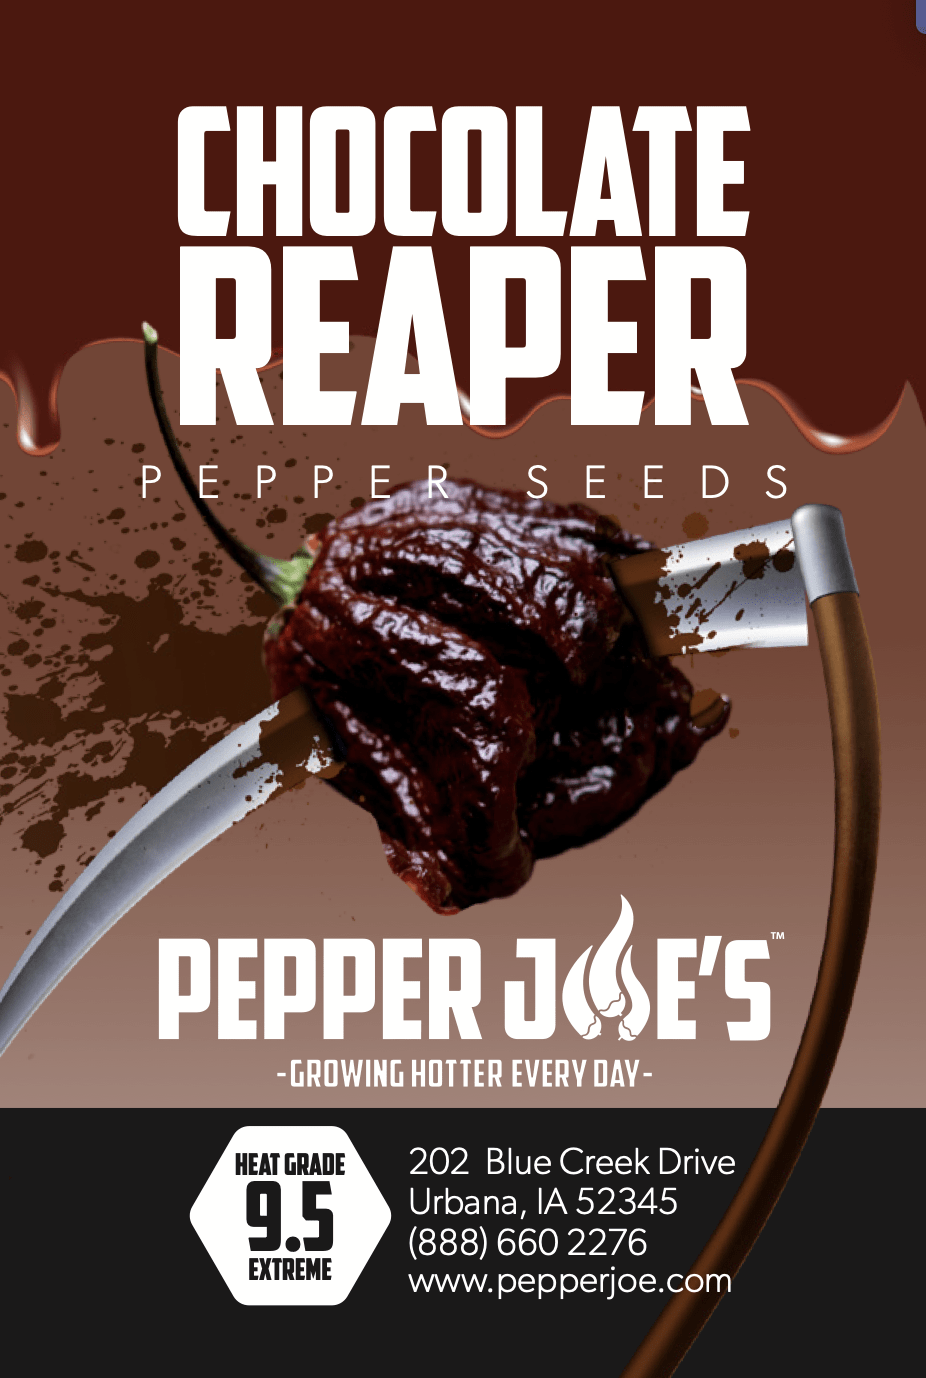 Pepper Joe's chocolate reaper seeds - seed label